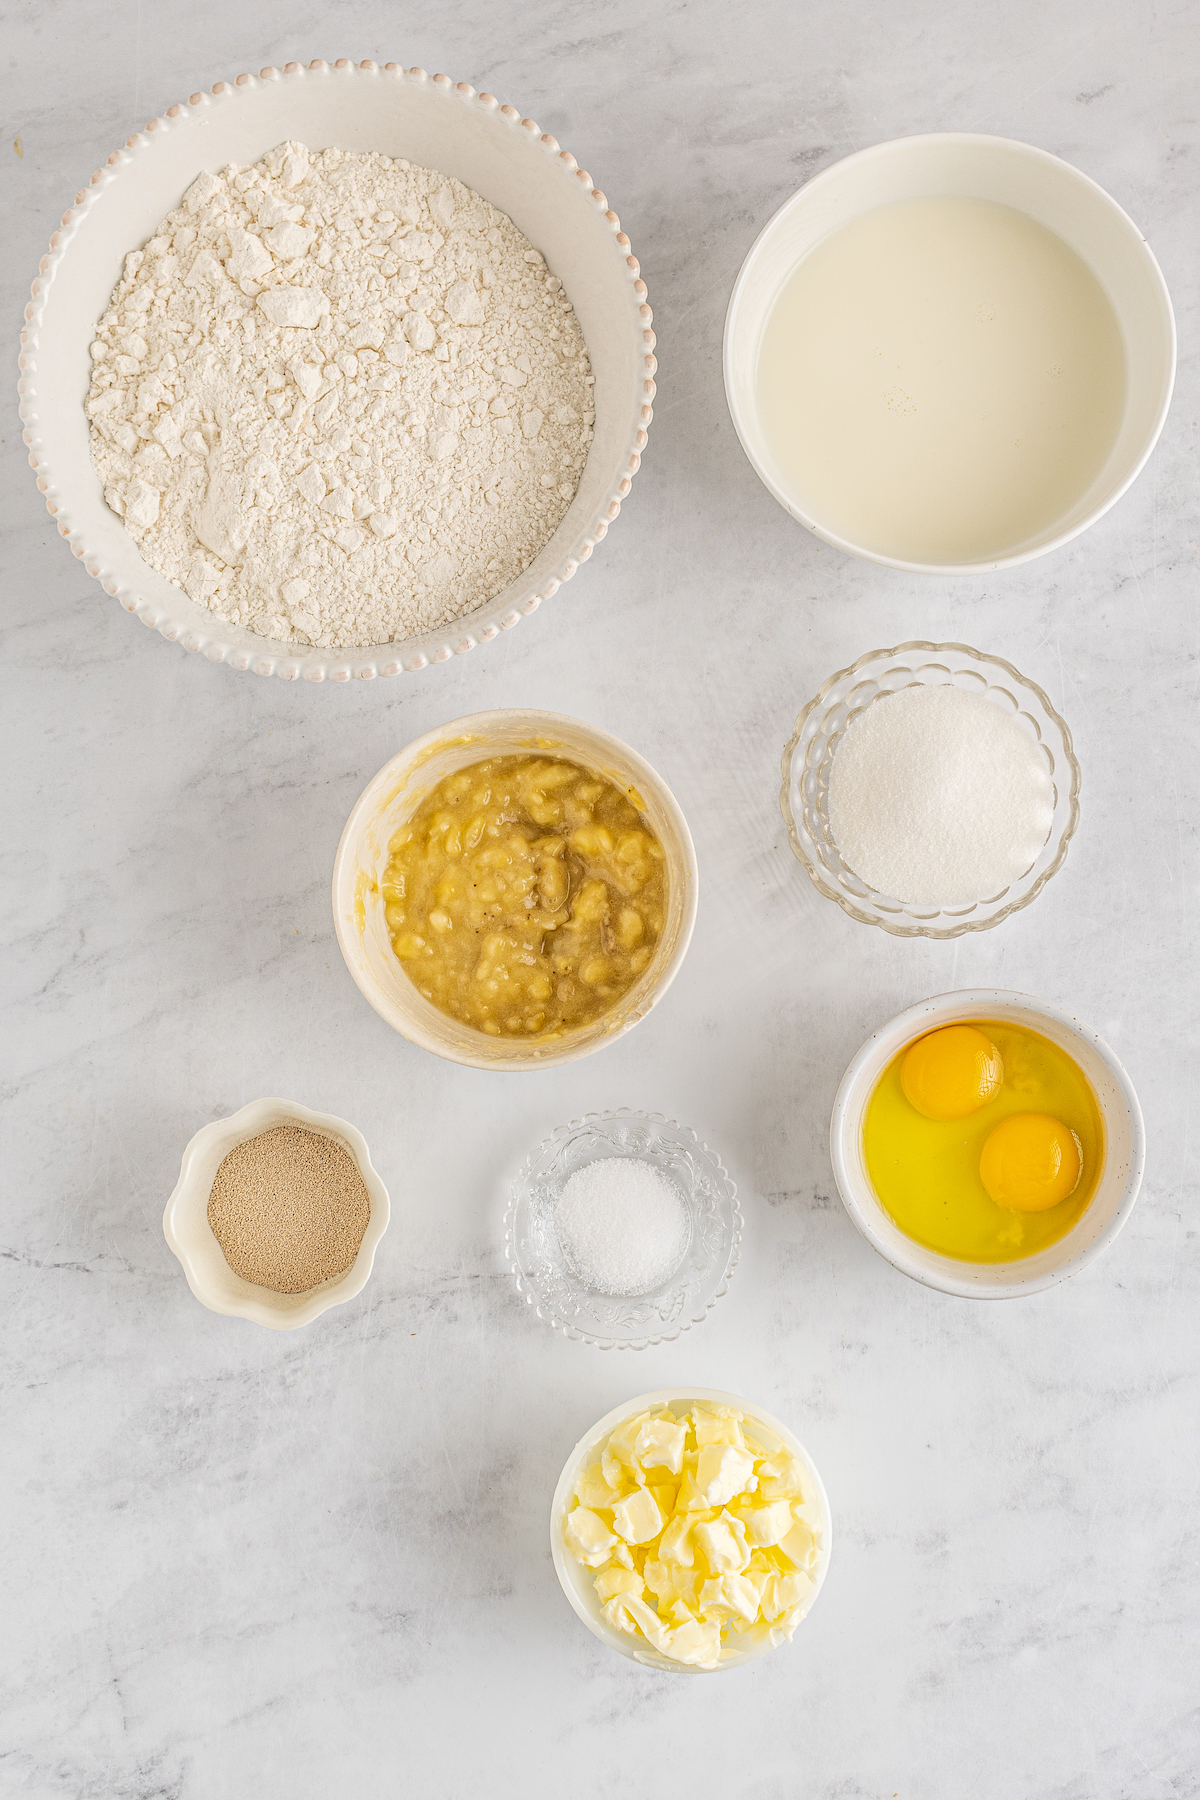 From top left: Flour, milk, brown sugar, white sugar, vanilla, salt, eggs, butter.